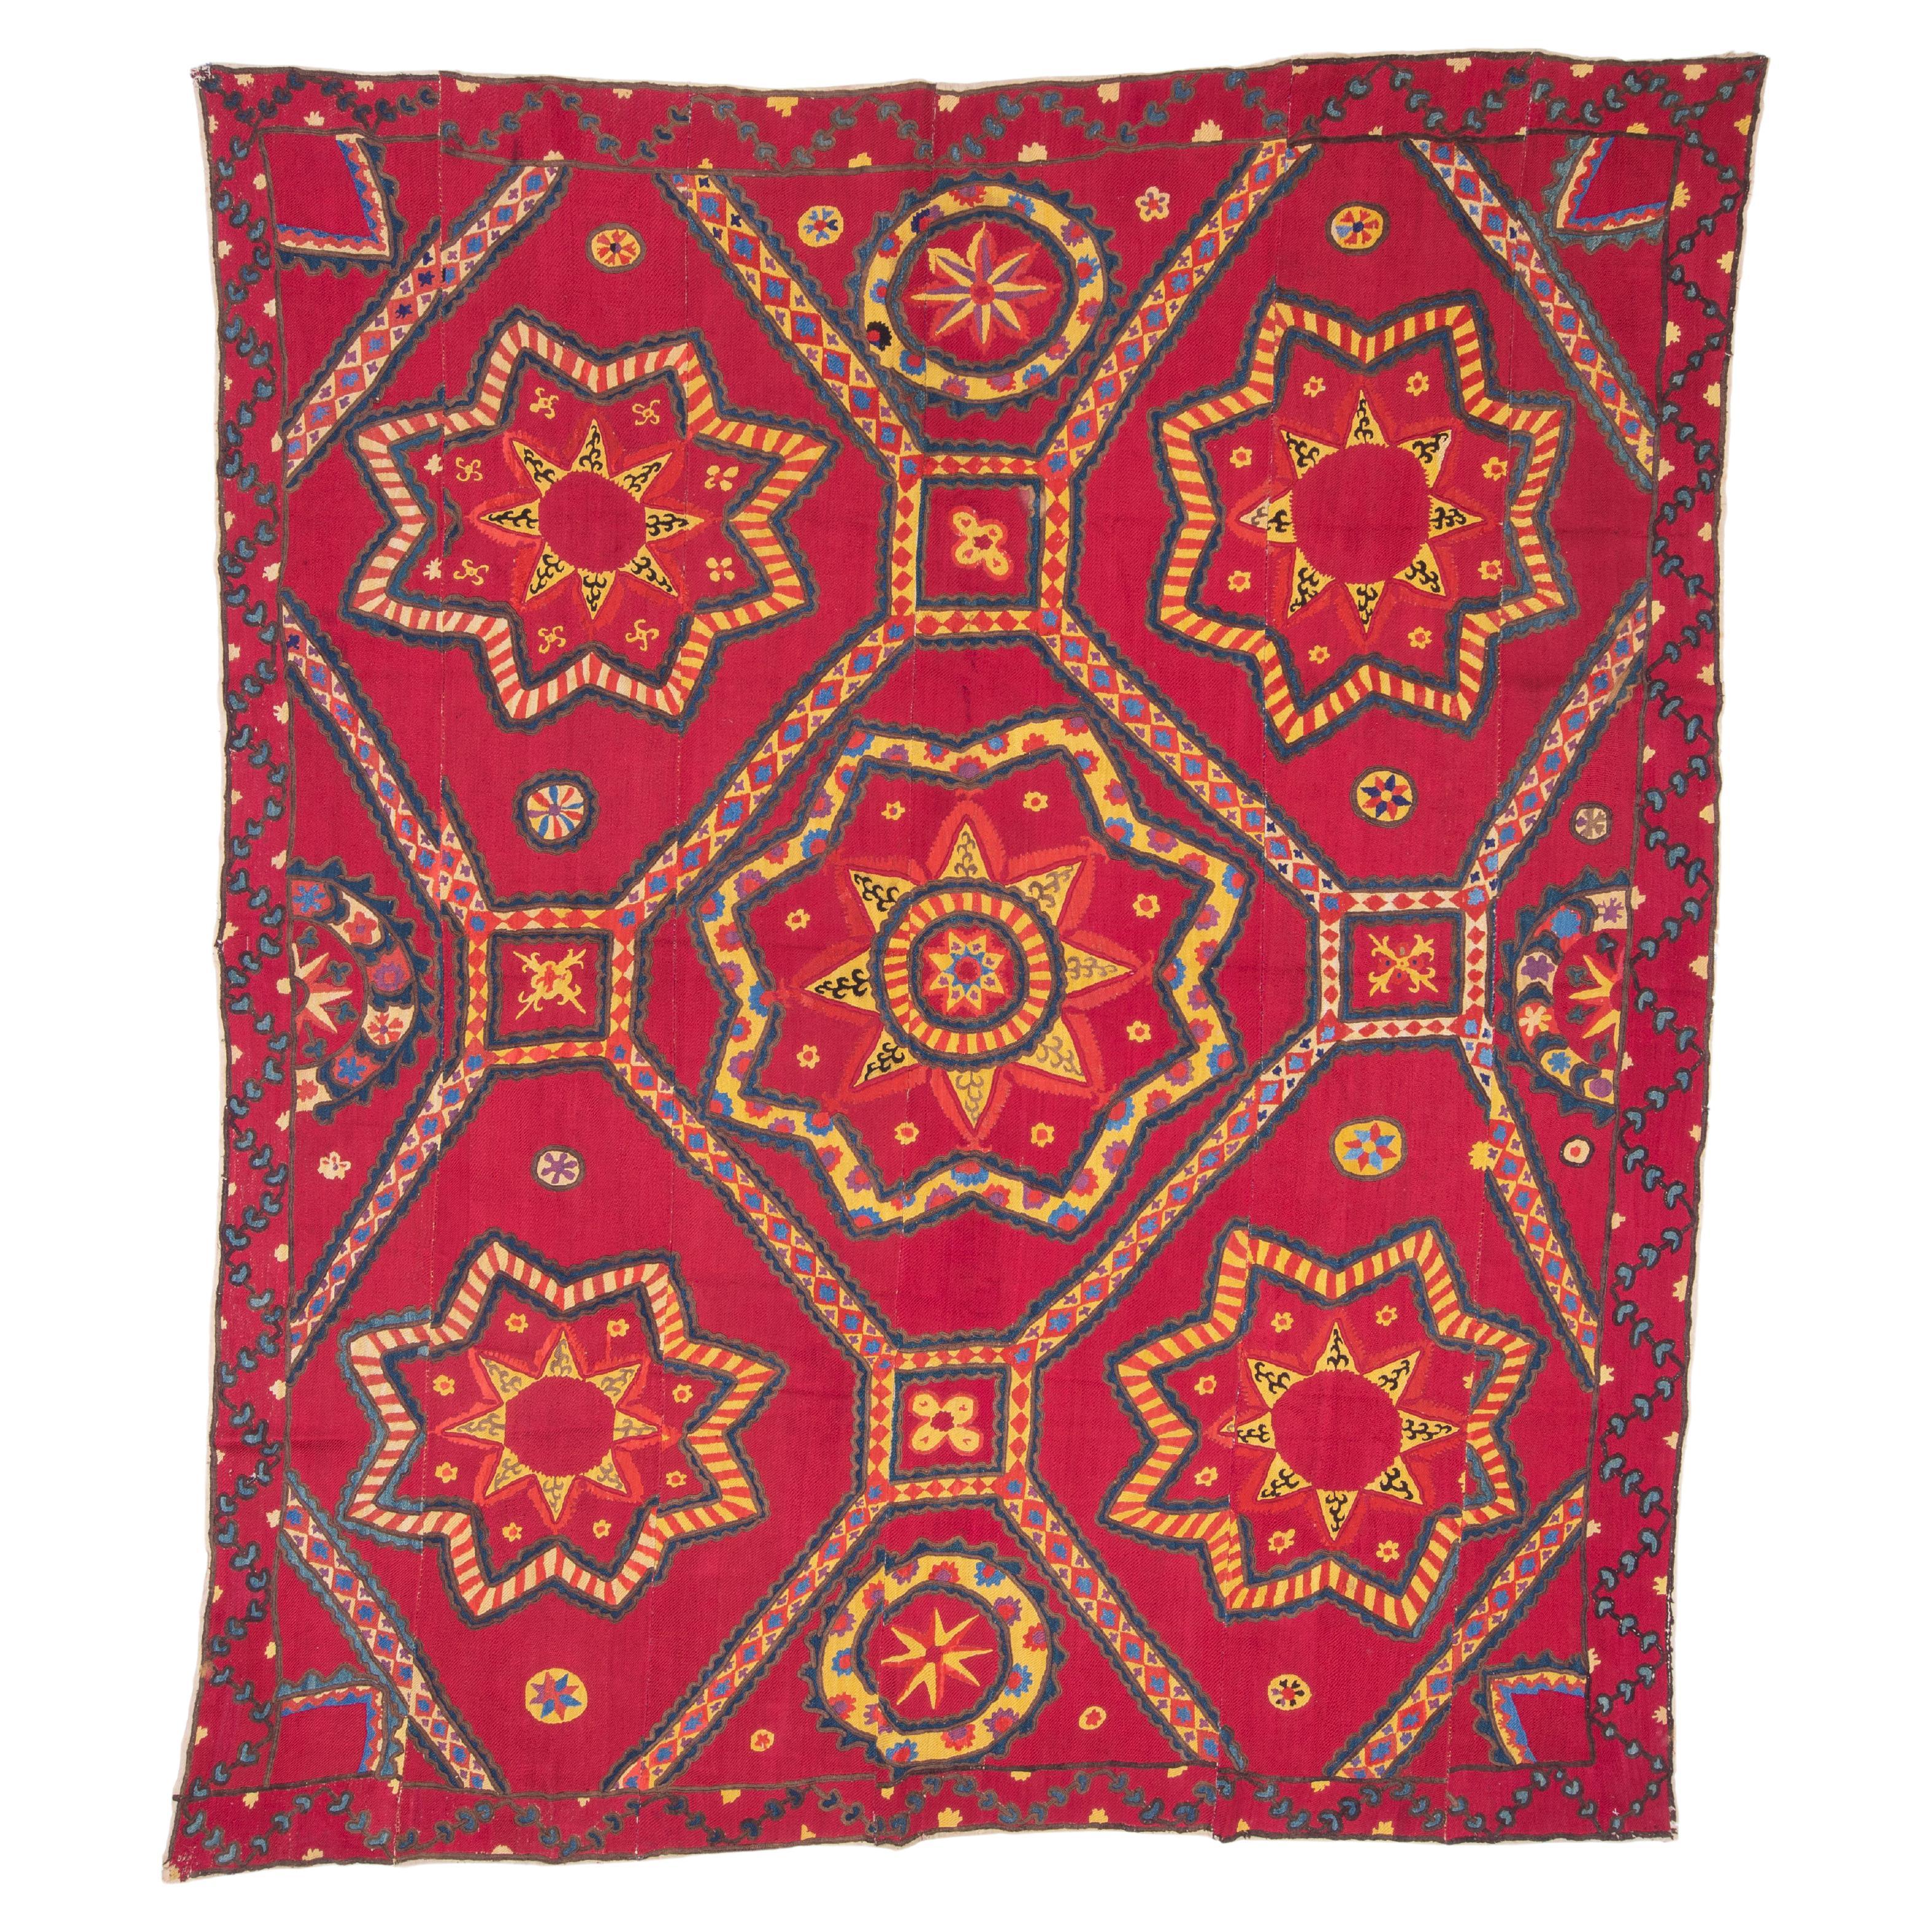 Fully Embroidered Antique Suzani from Pishkent, Uzbekistan, Late 19th C